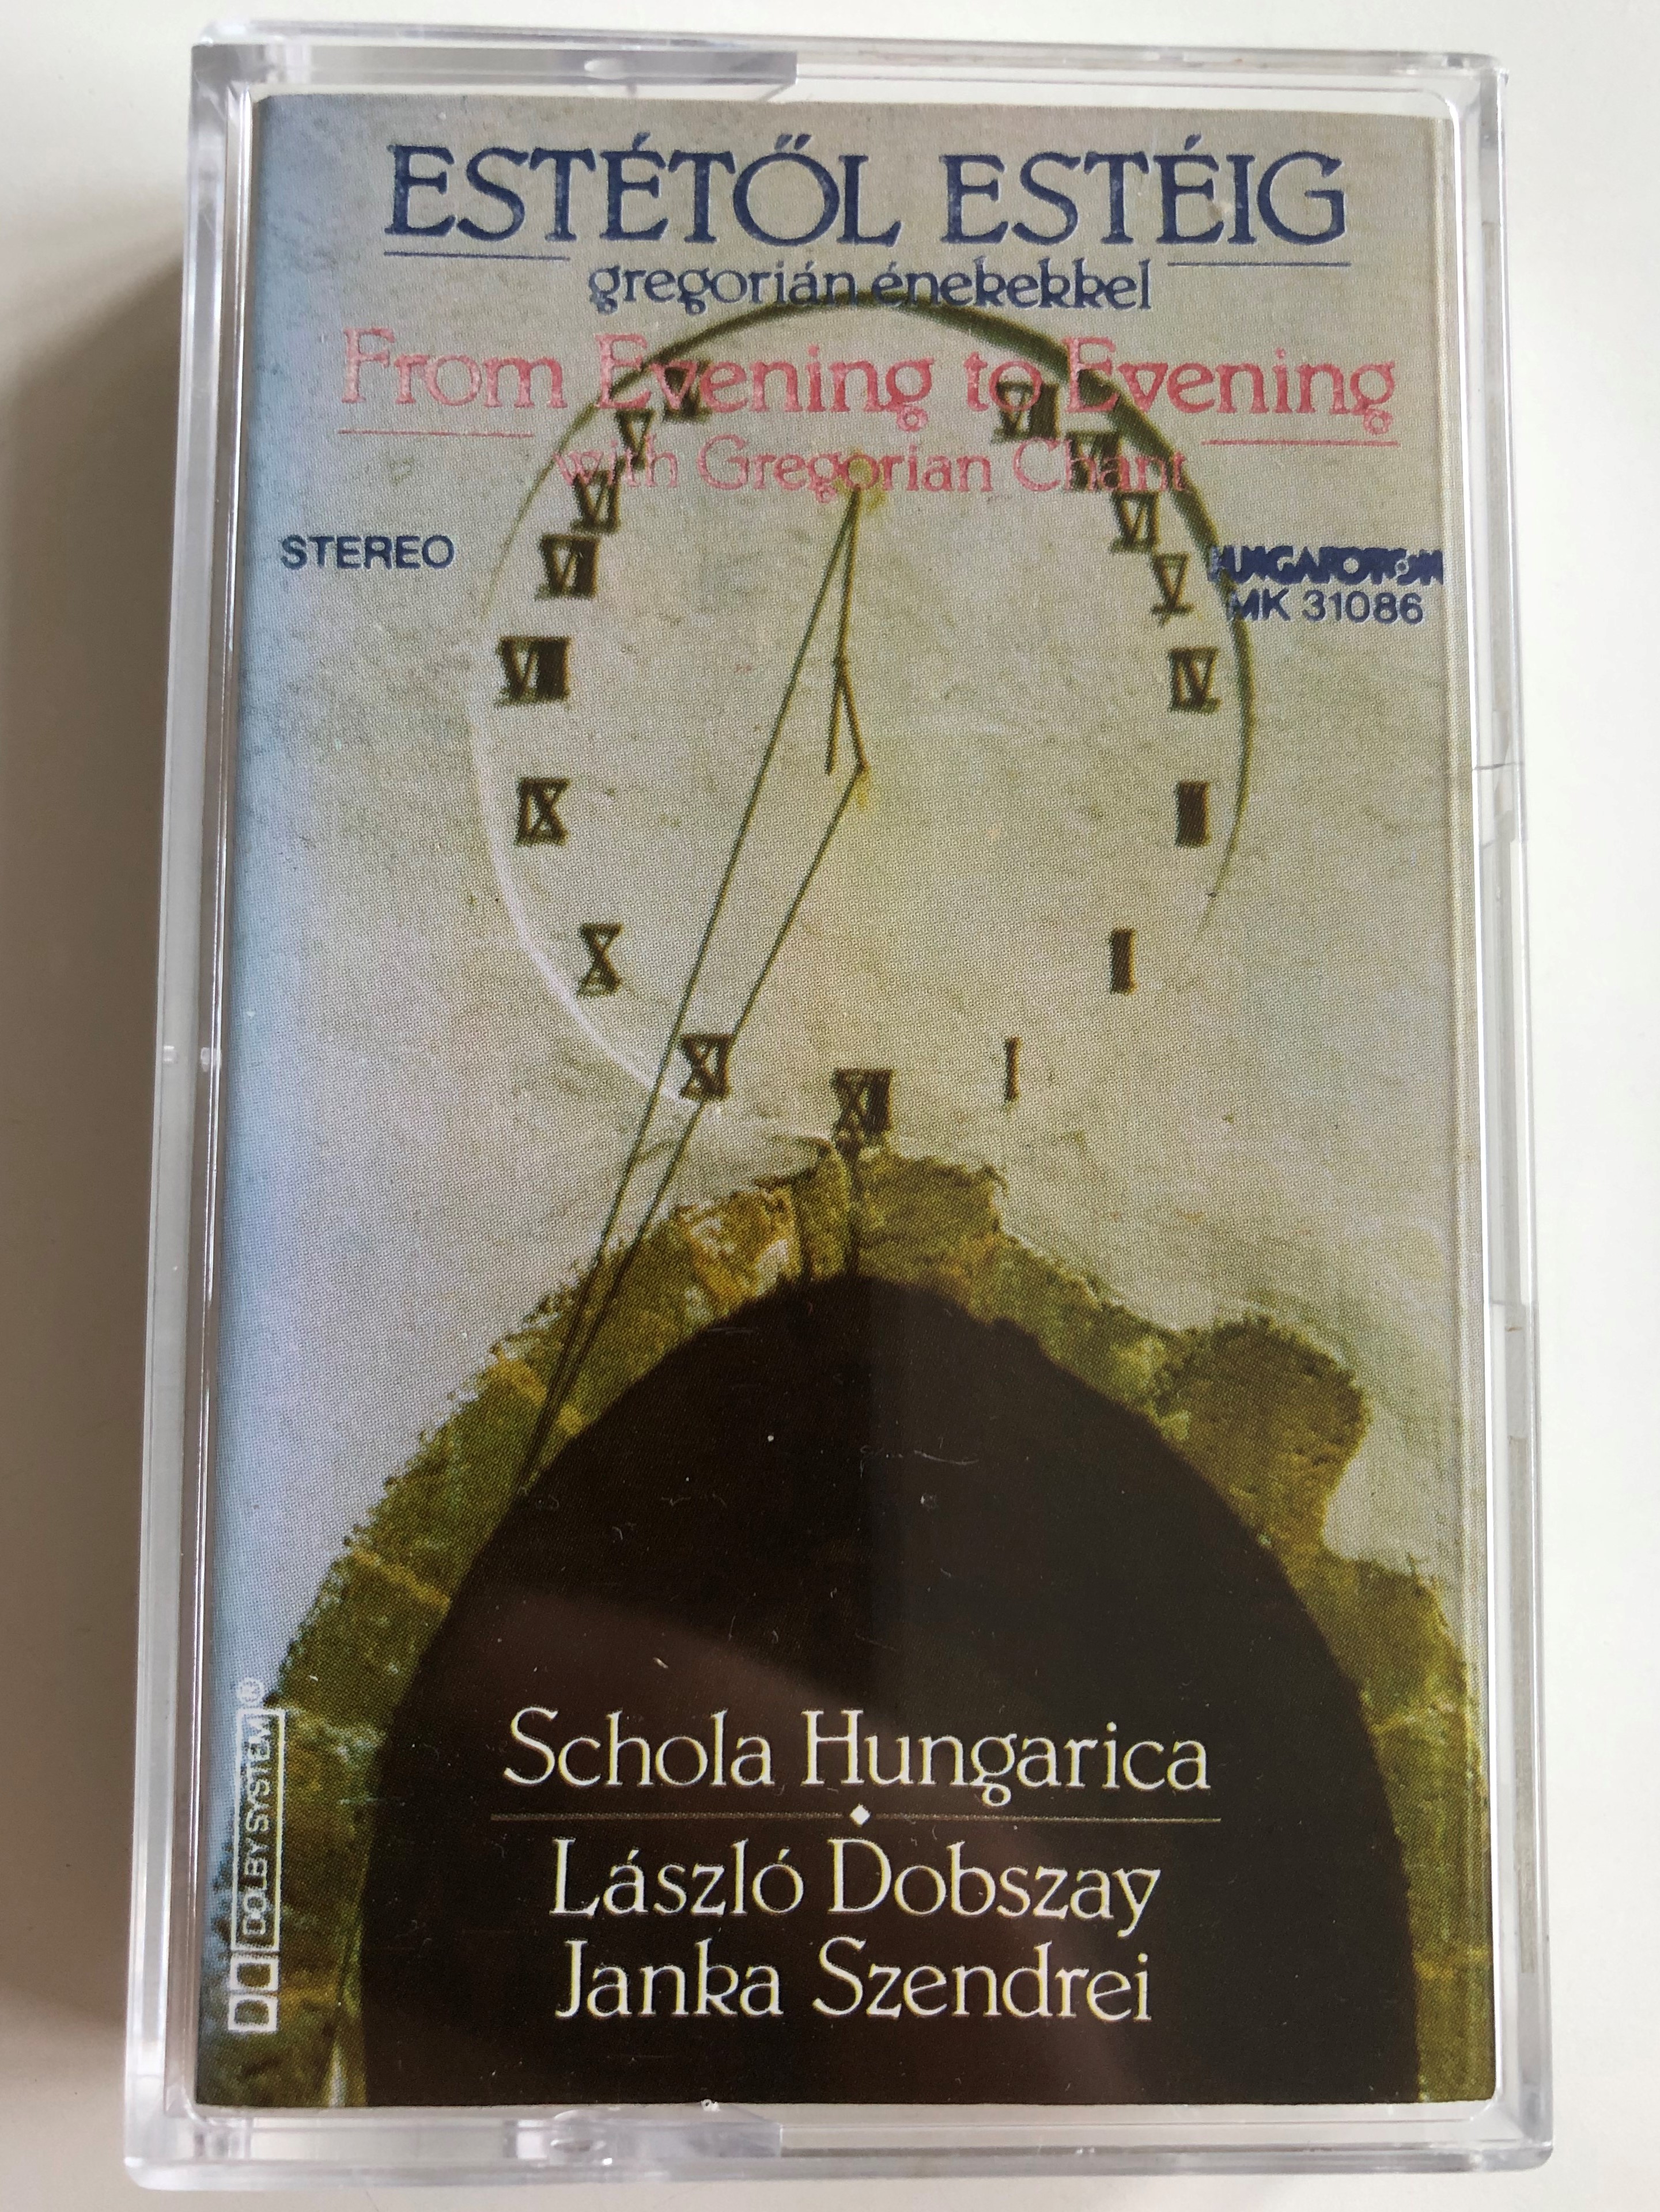 est-t-l-est-ig-gregorian-nekekkel-from-evening-to-evening-with-gregorian-chants-schola-hungarica-l-szl-dobszay-janka-szendrei-hungaroton-cassette-stereo-mk-31086-1-.jpg